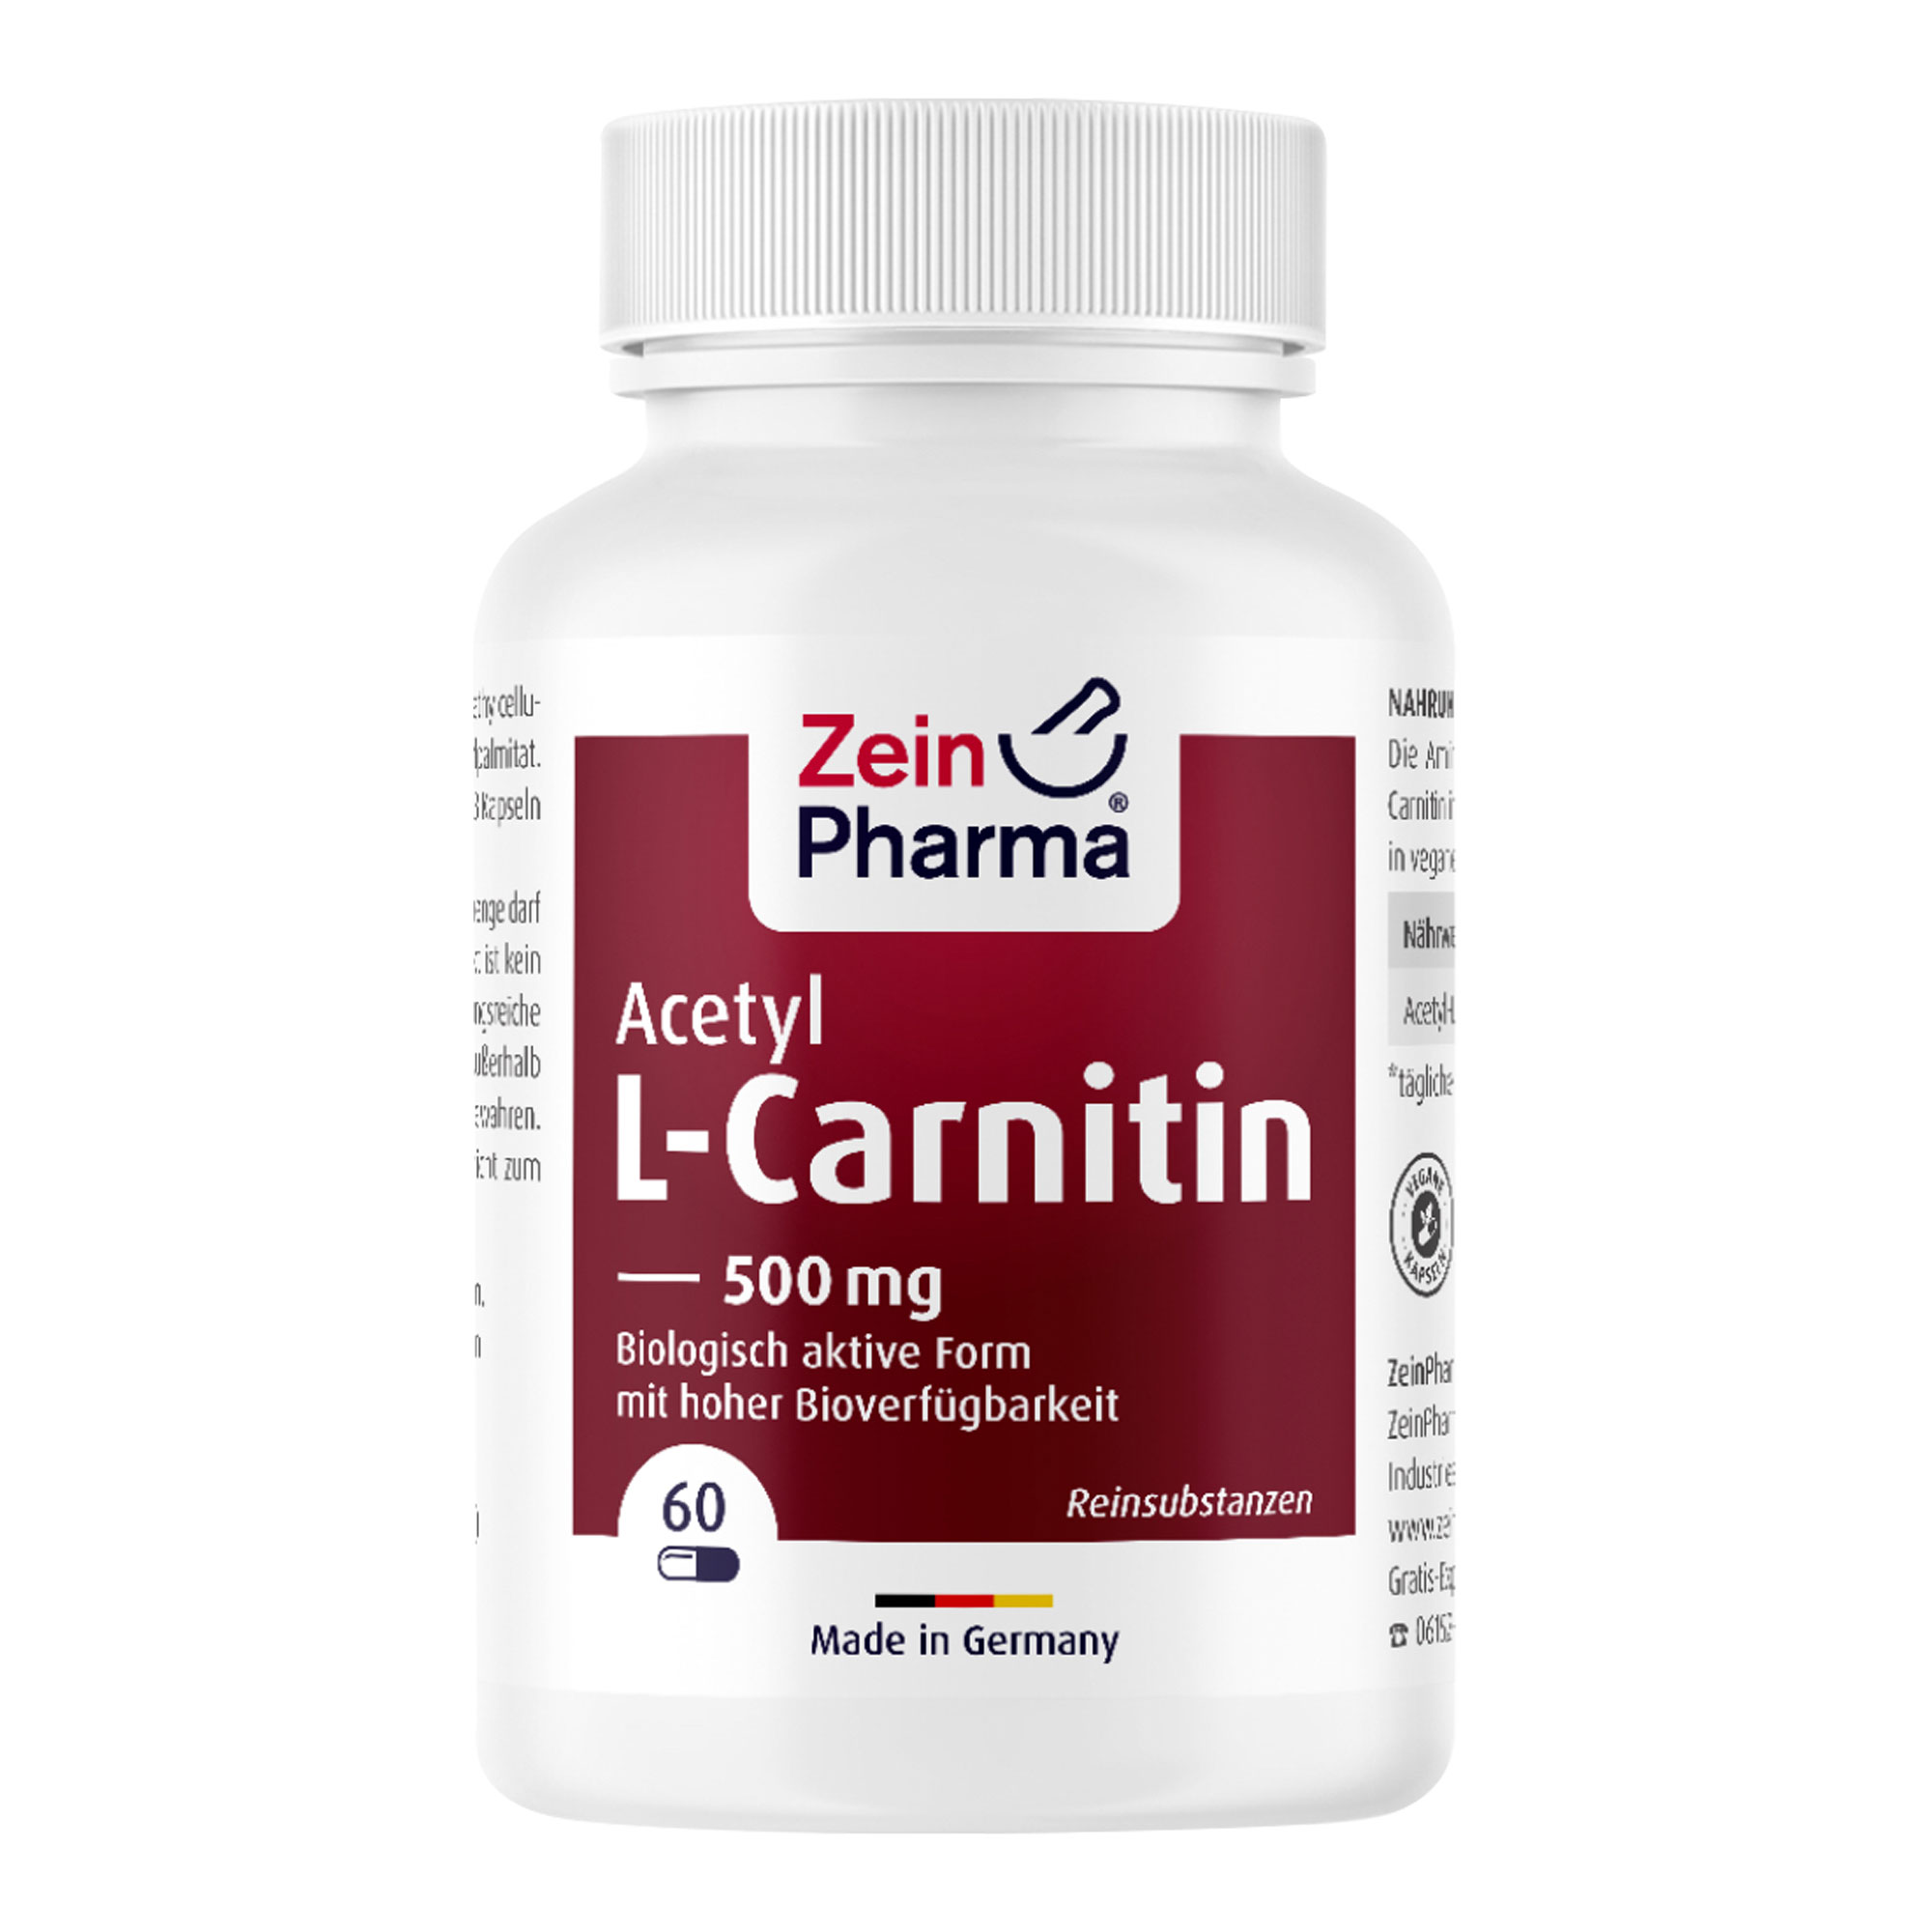 Nahrungsergänzungsmittel mit Acetyl-L-Carnitin.